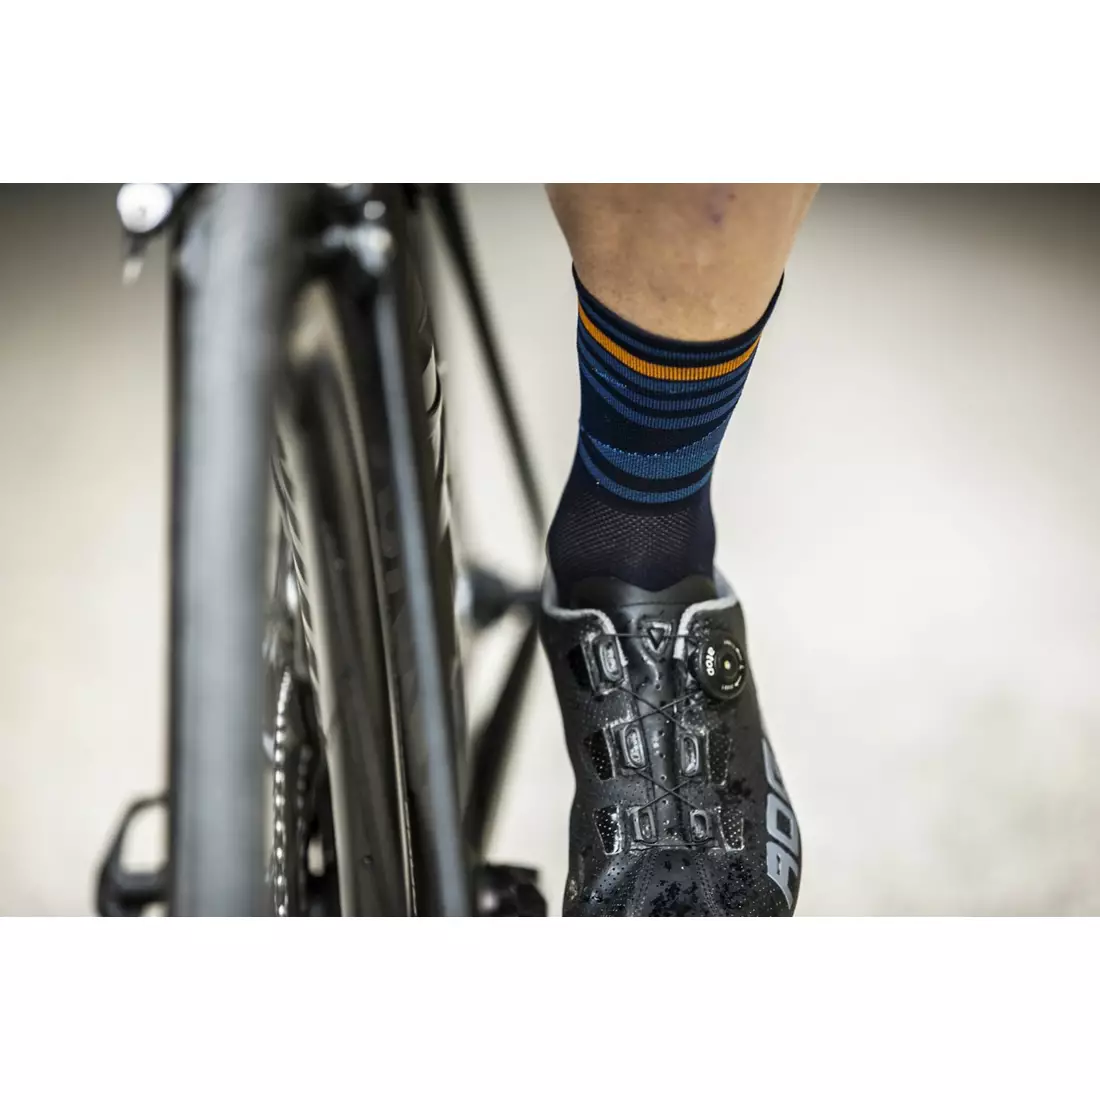 ROGELLI men's cycling socks STRIPE orange